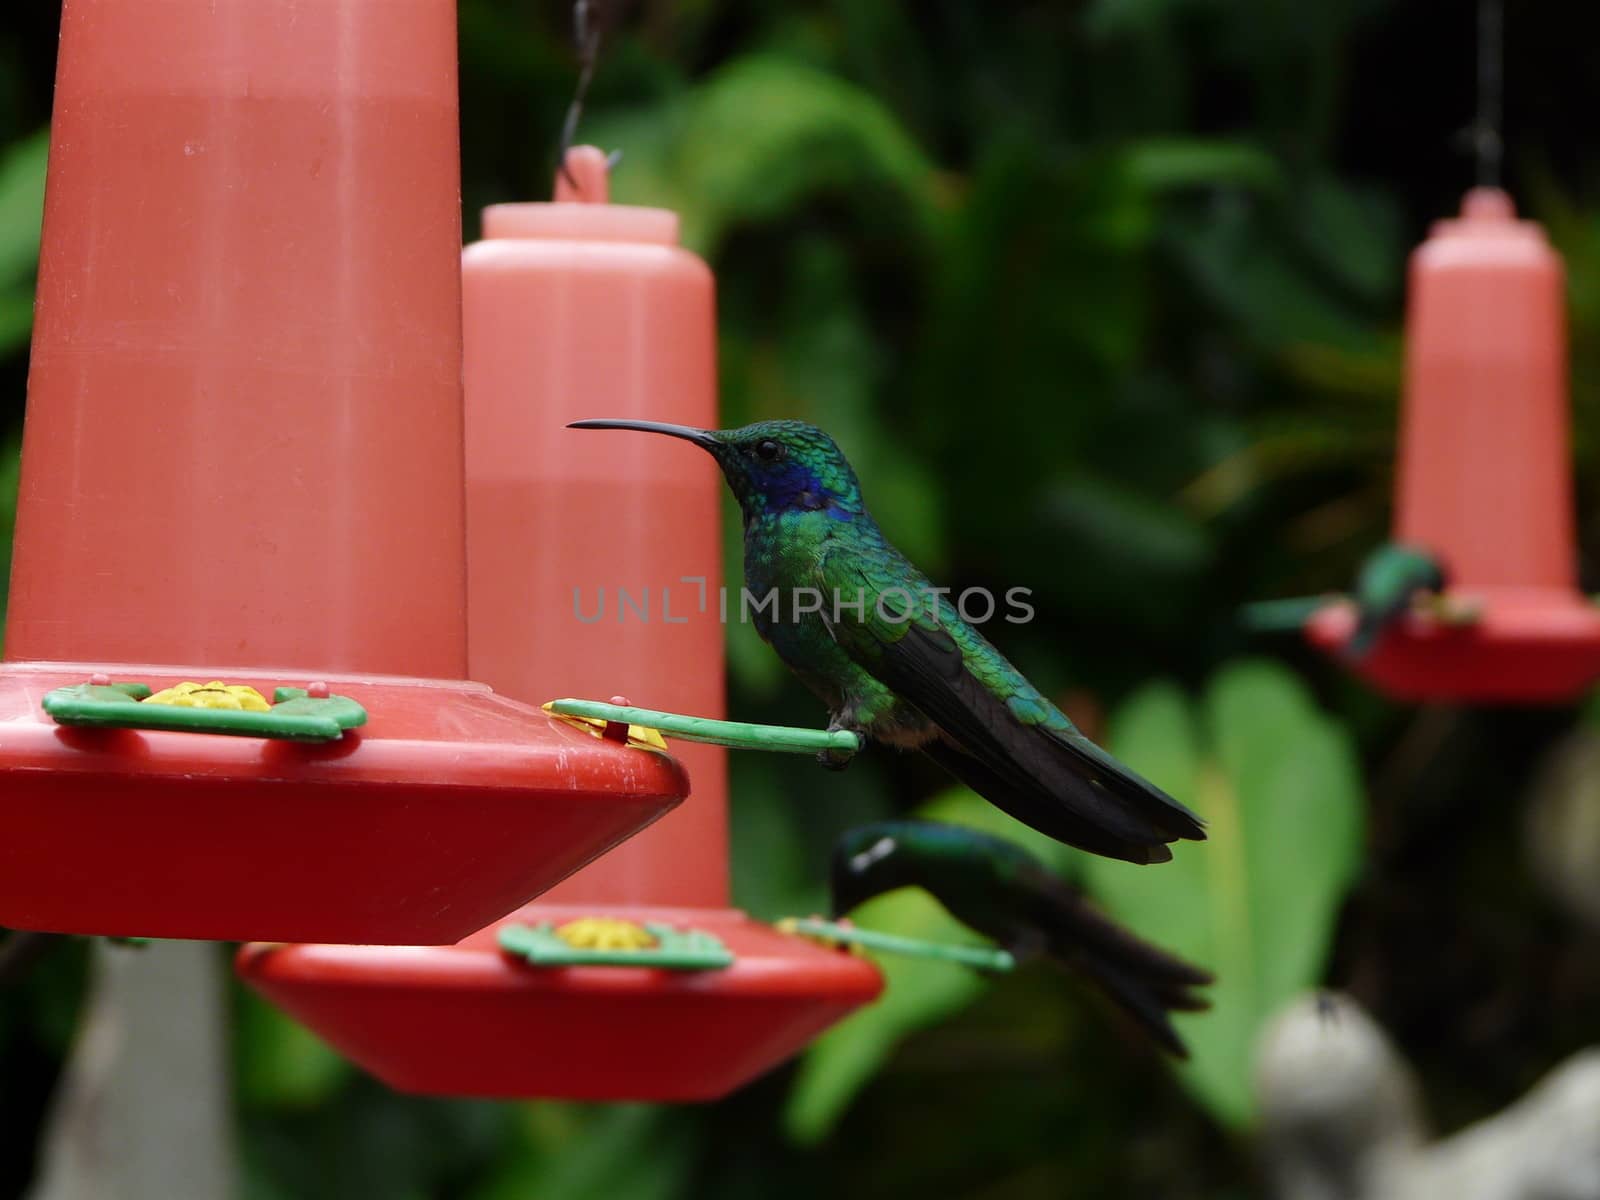 Hummingbird feeding from a red feeder